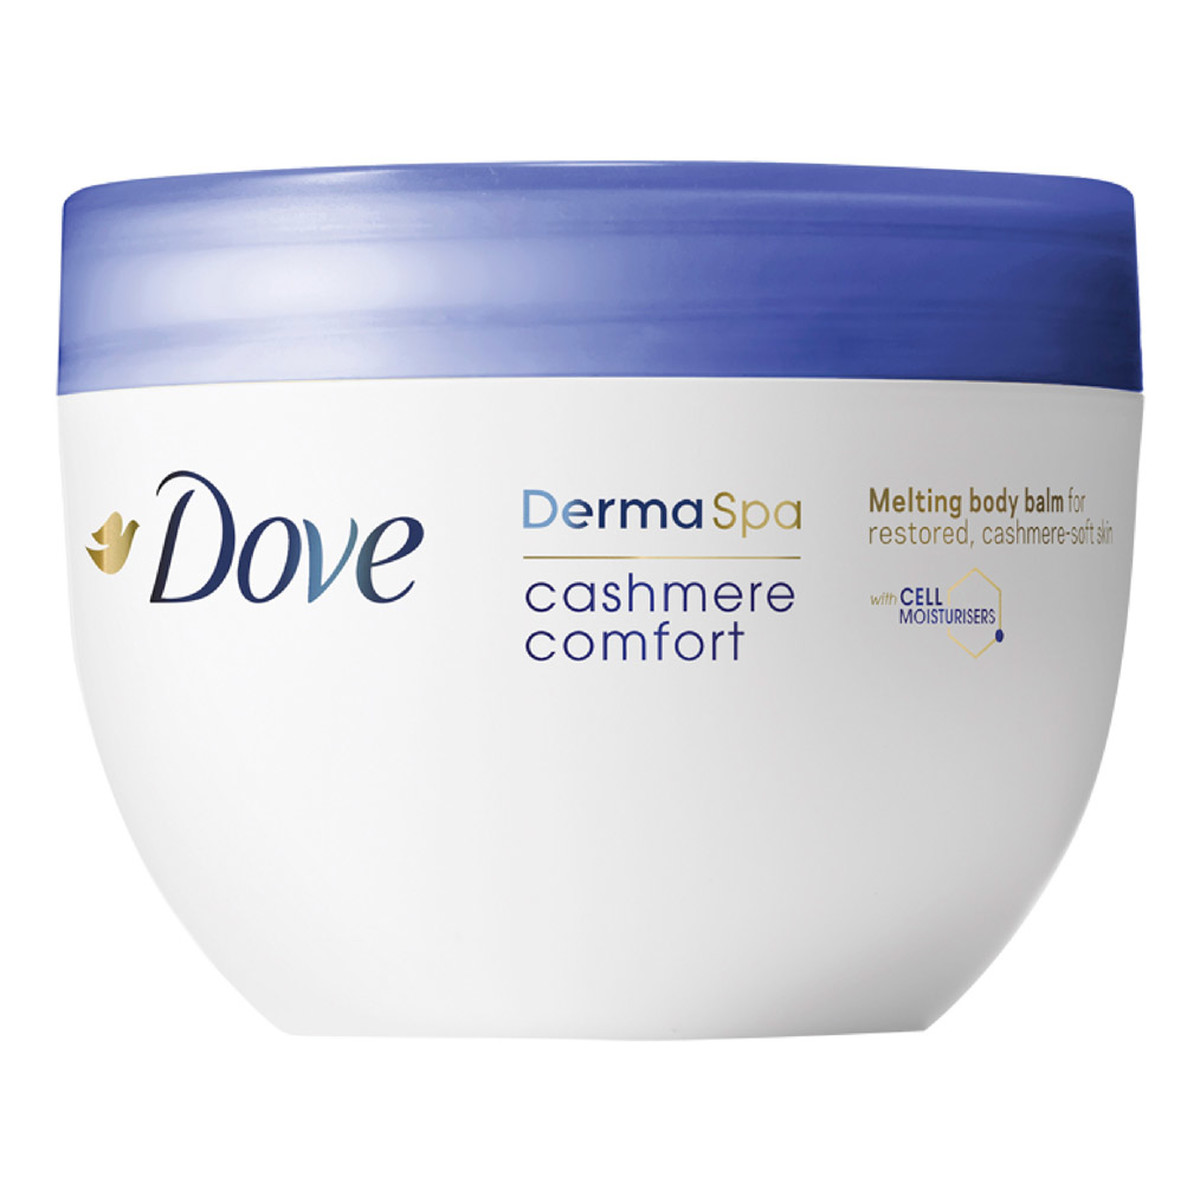 Dove DermaSpa Cashmere Comfort balsam do ciała do skóry delikatnej i gładkiej 300ml